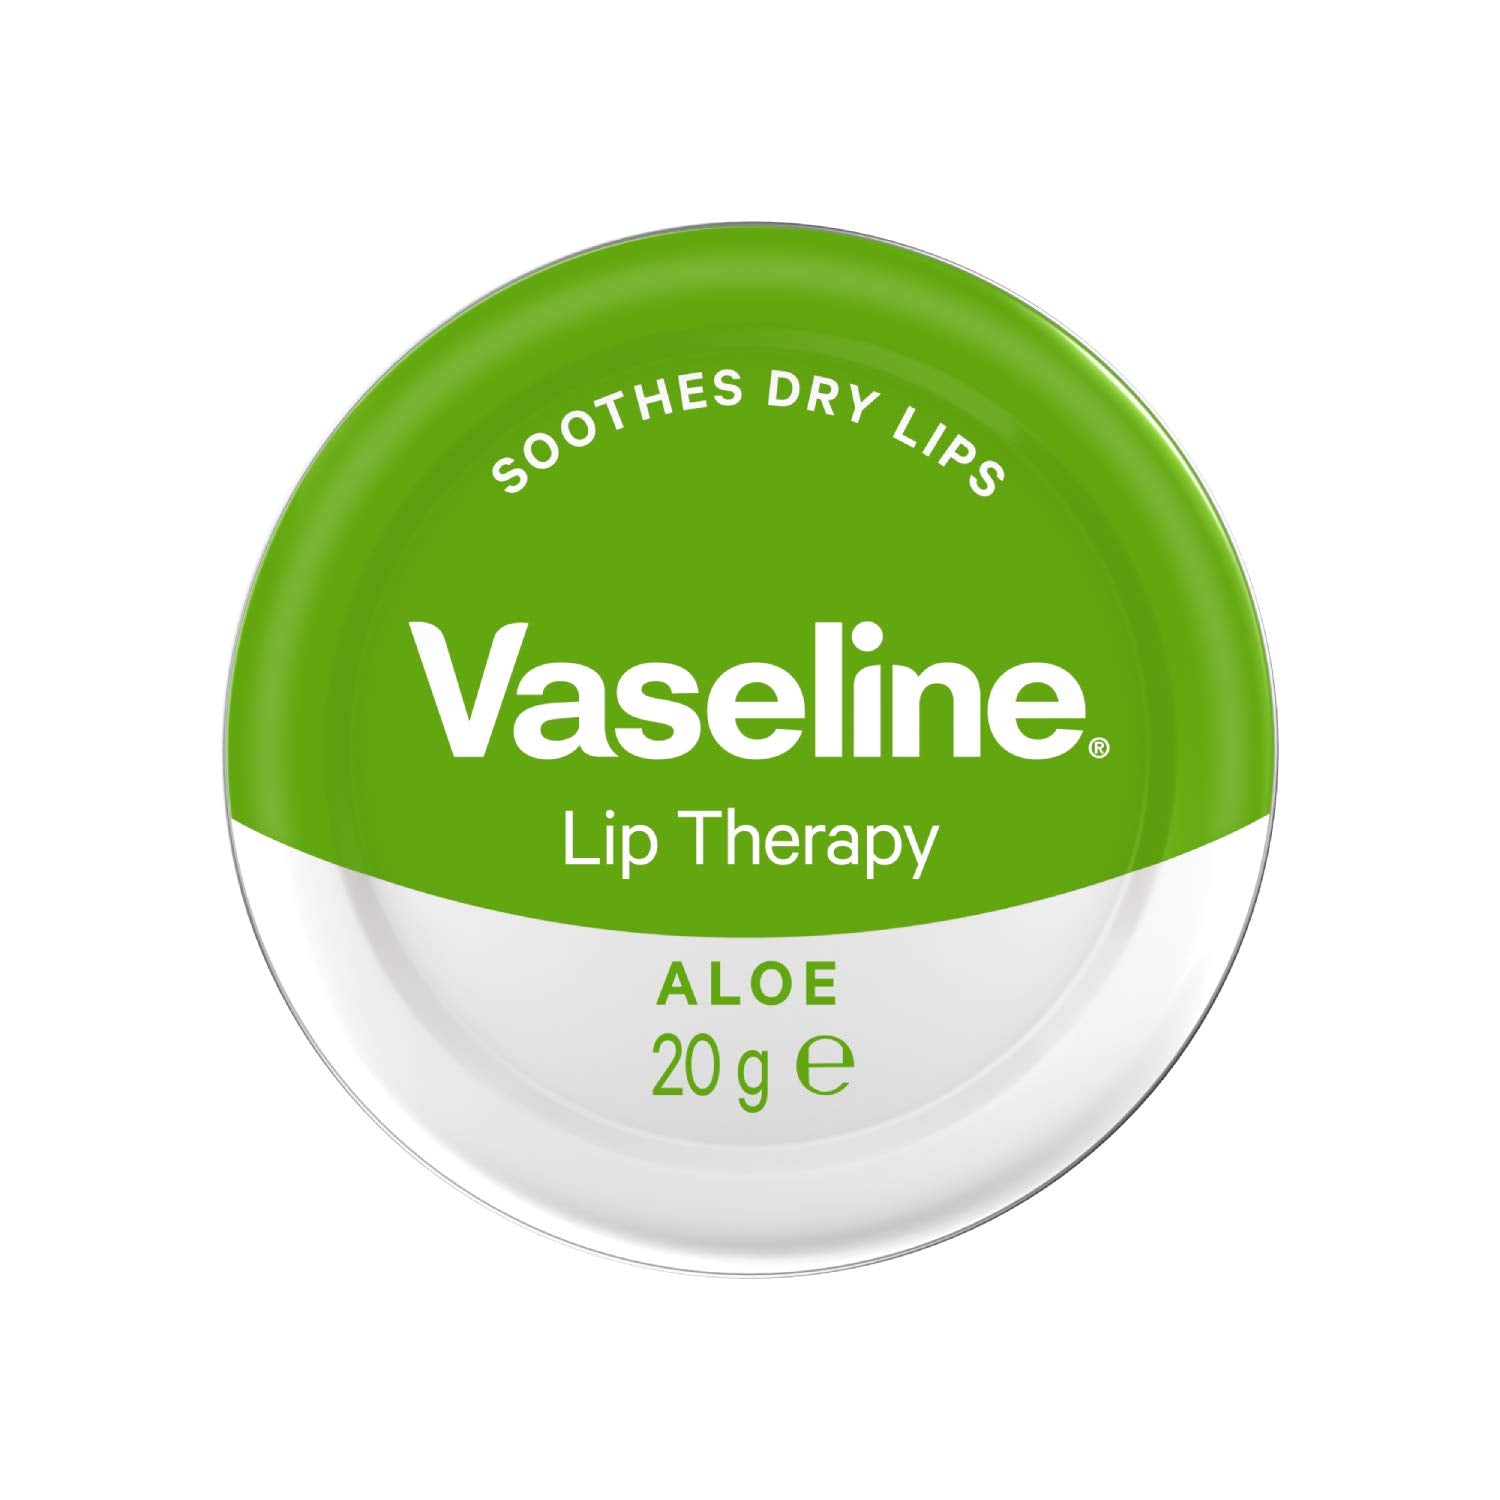 Vaseline Lip Therapy Aloe, 20g